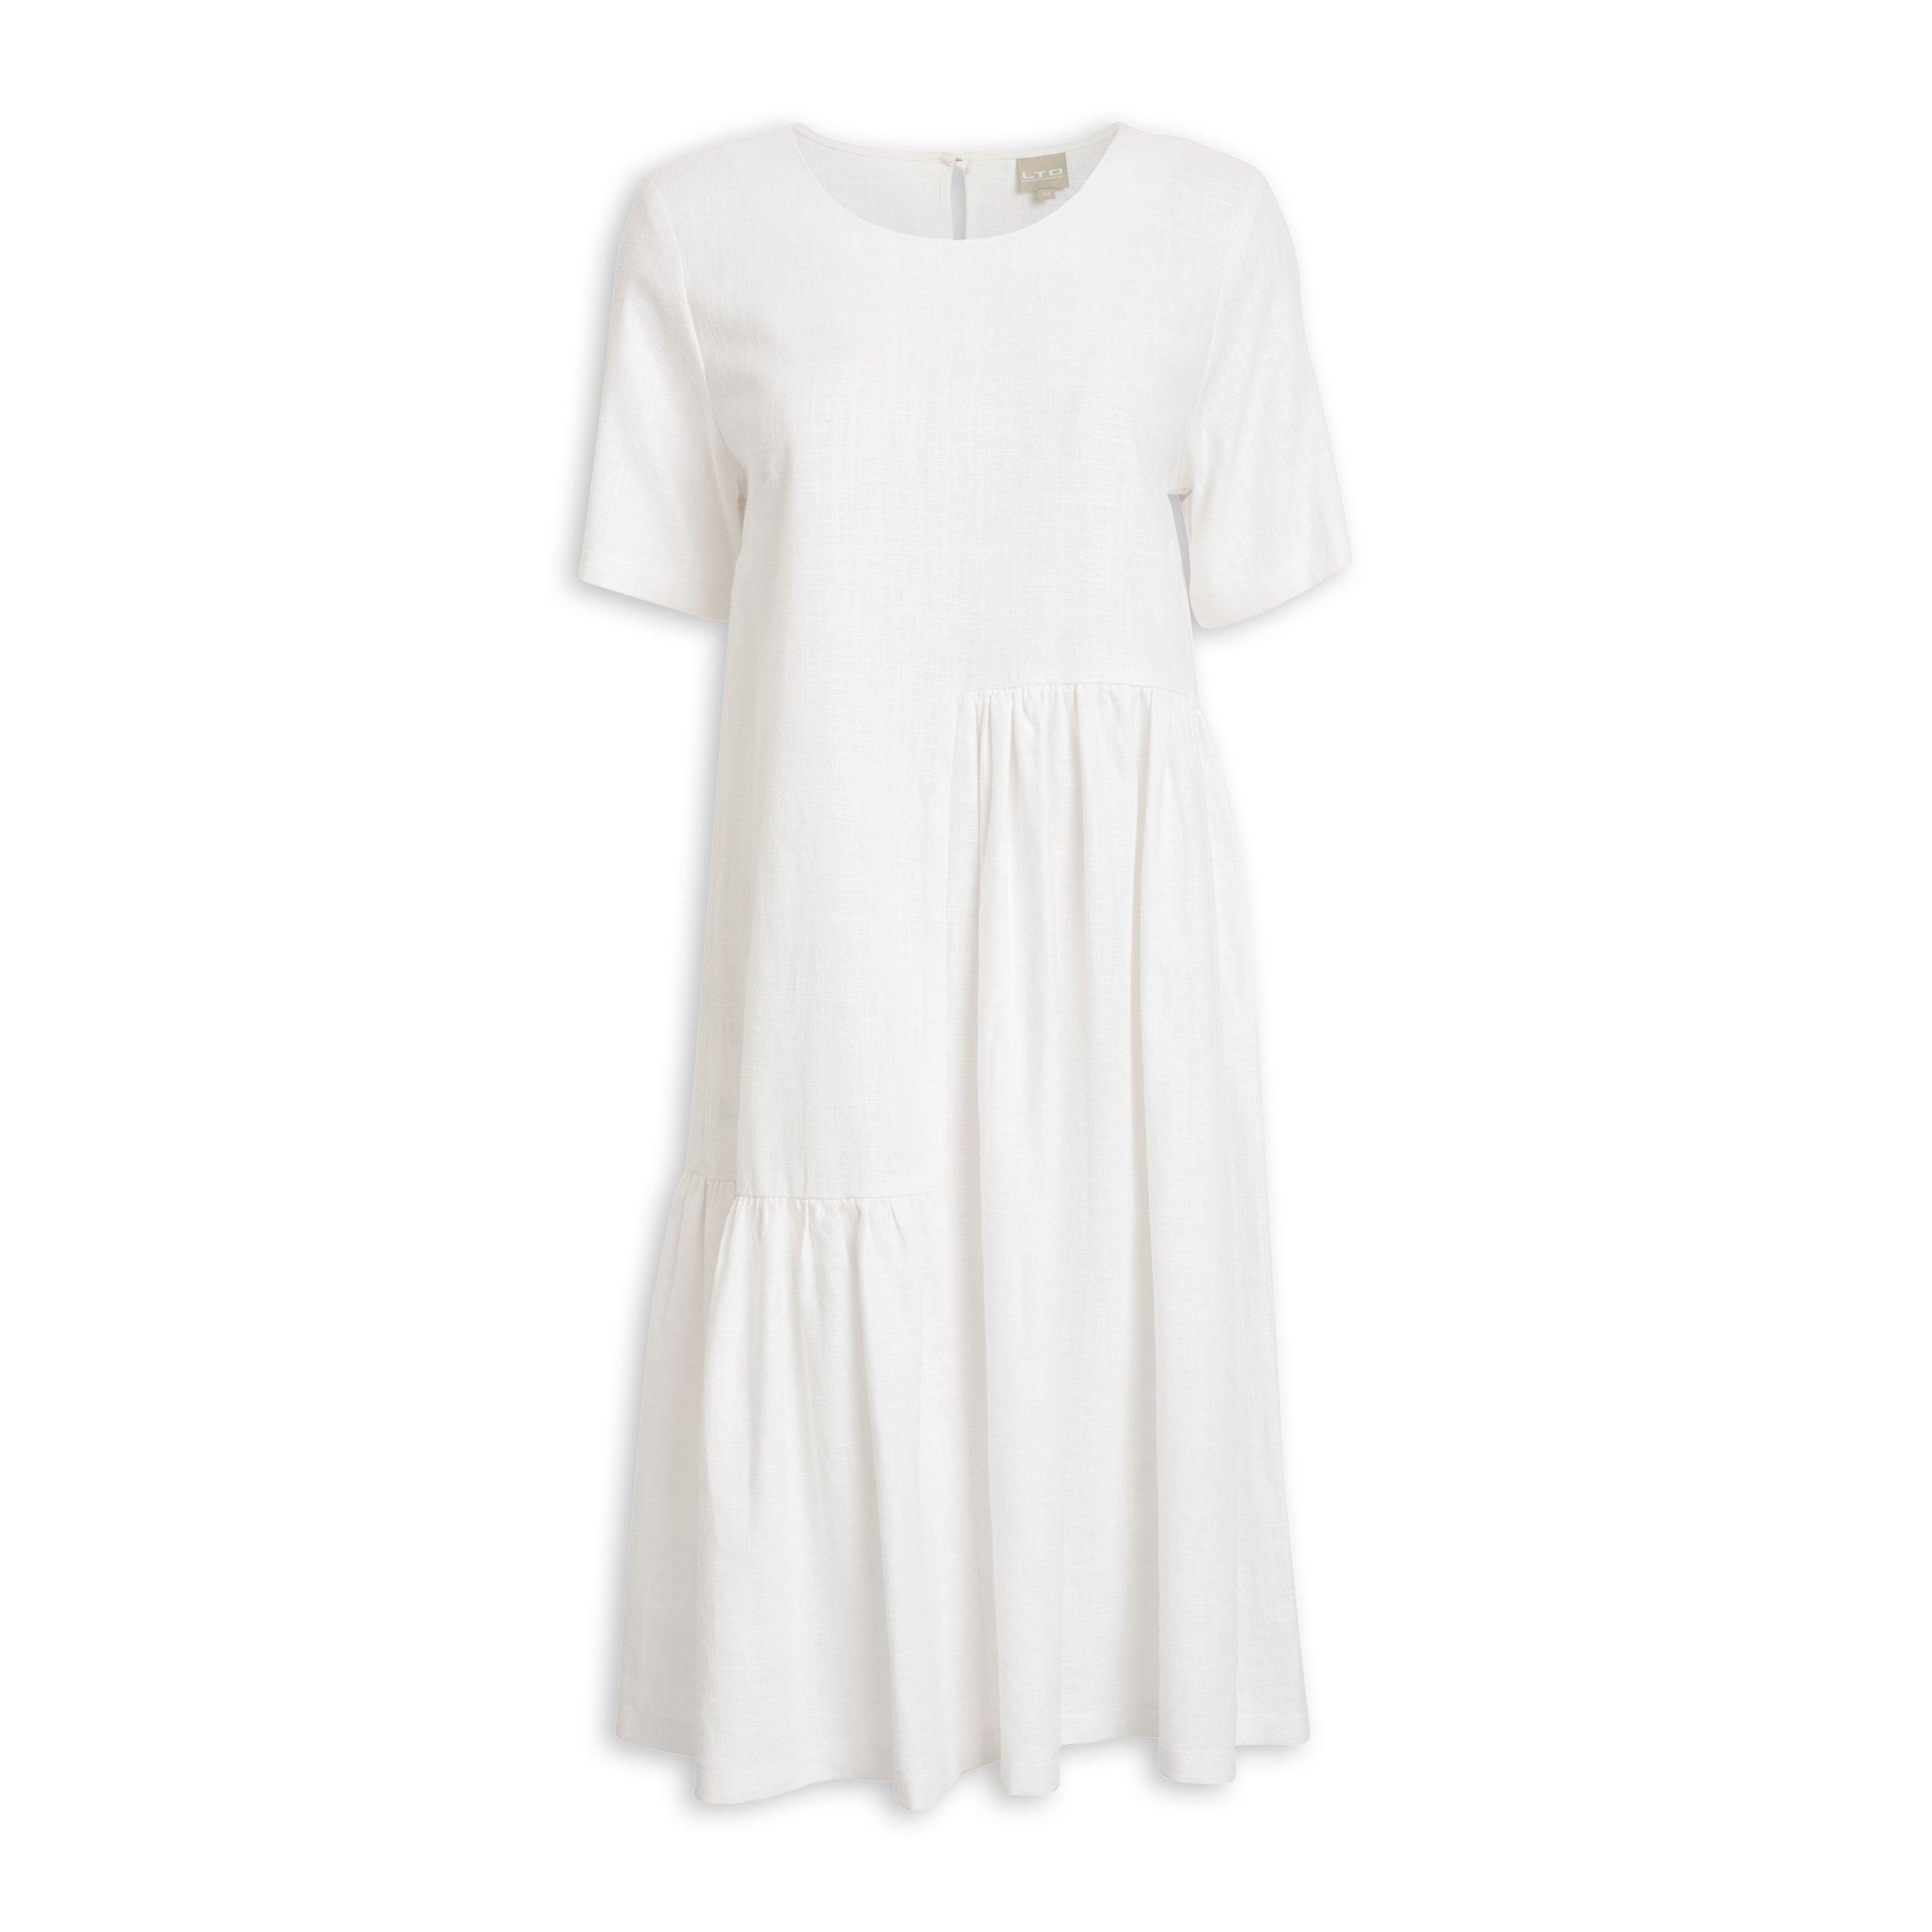 Buy Ltd Woman White Linen Dress Online Truworths 